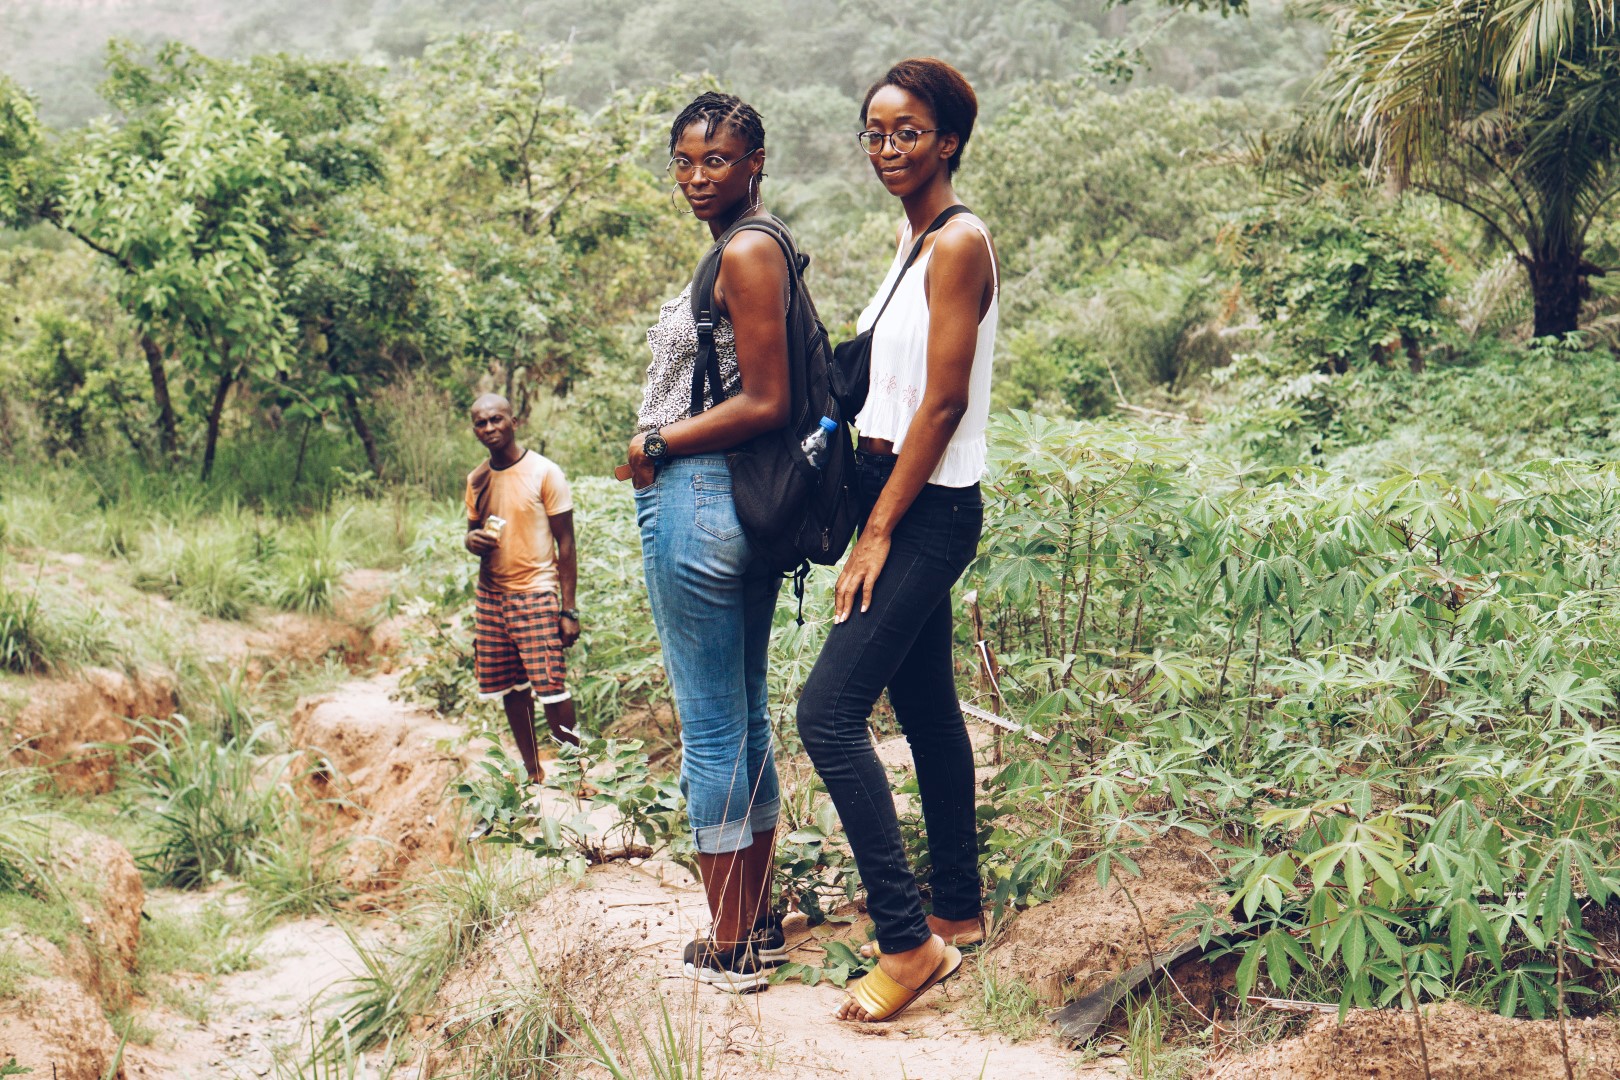 Cassie Daves and Friend at oine forest in Enugu